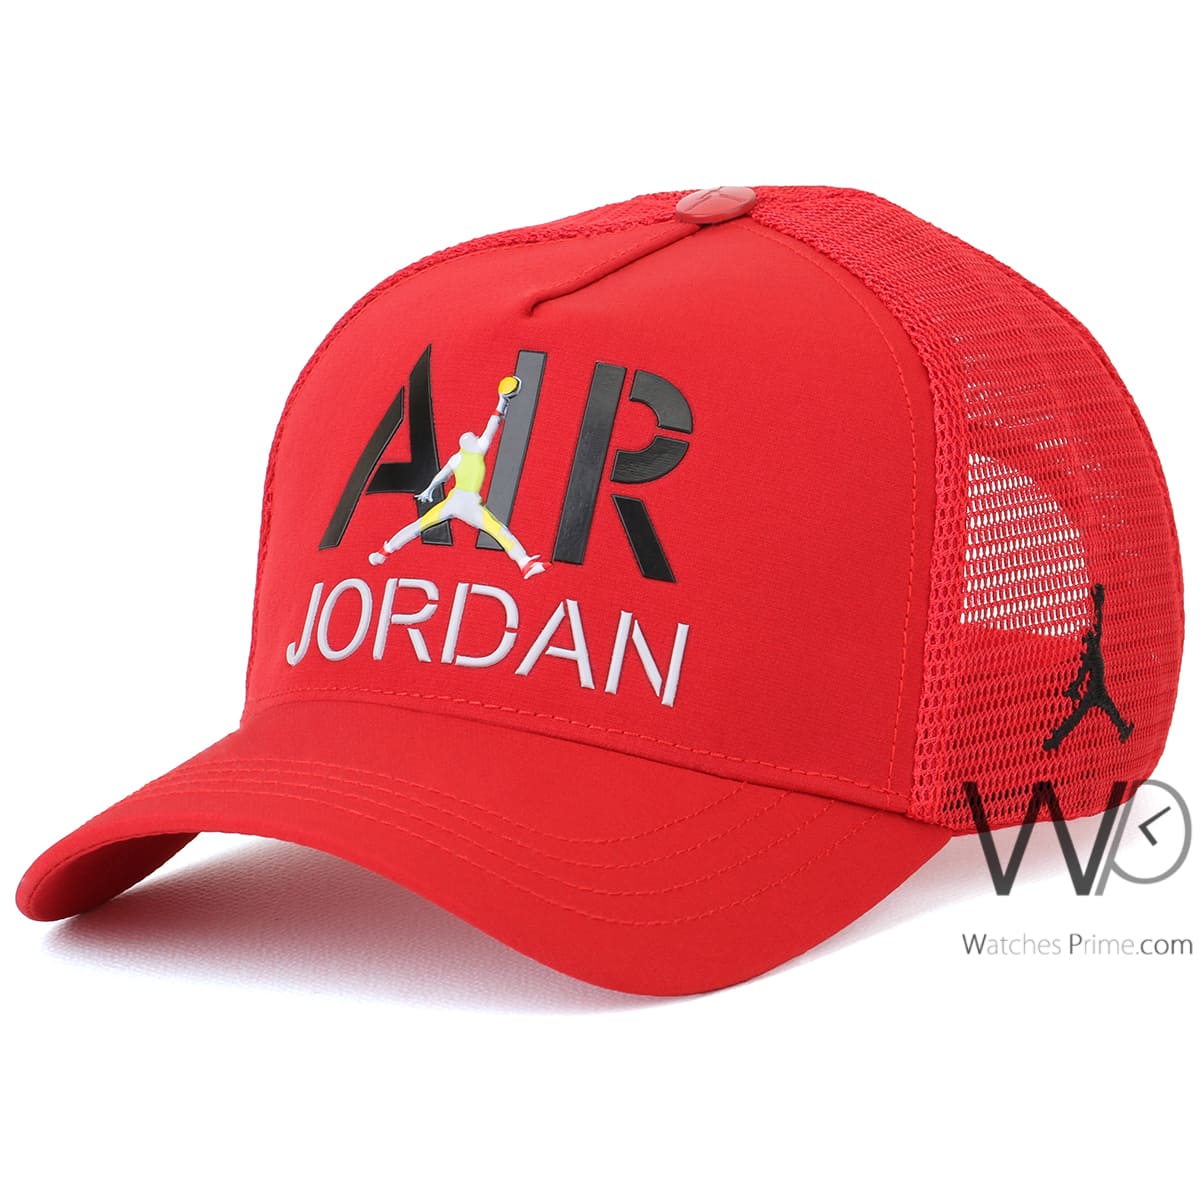 Nike Air Jordan Red trucker Net Cap | Watches Prime